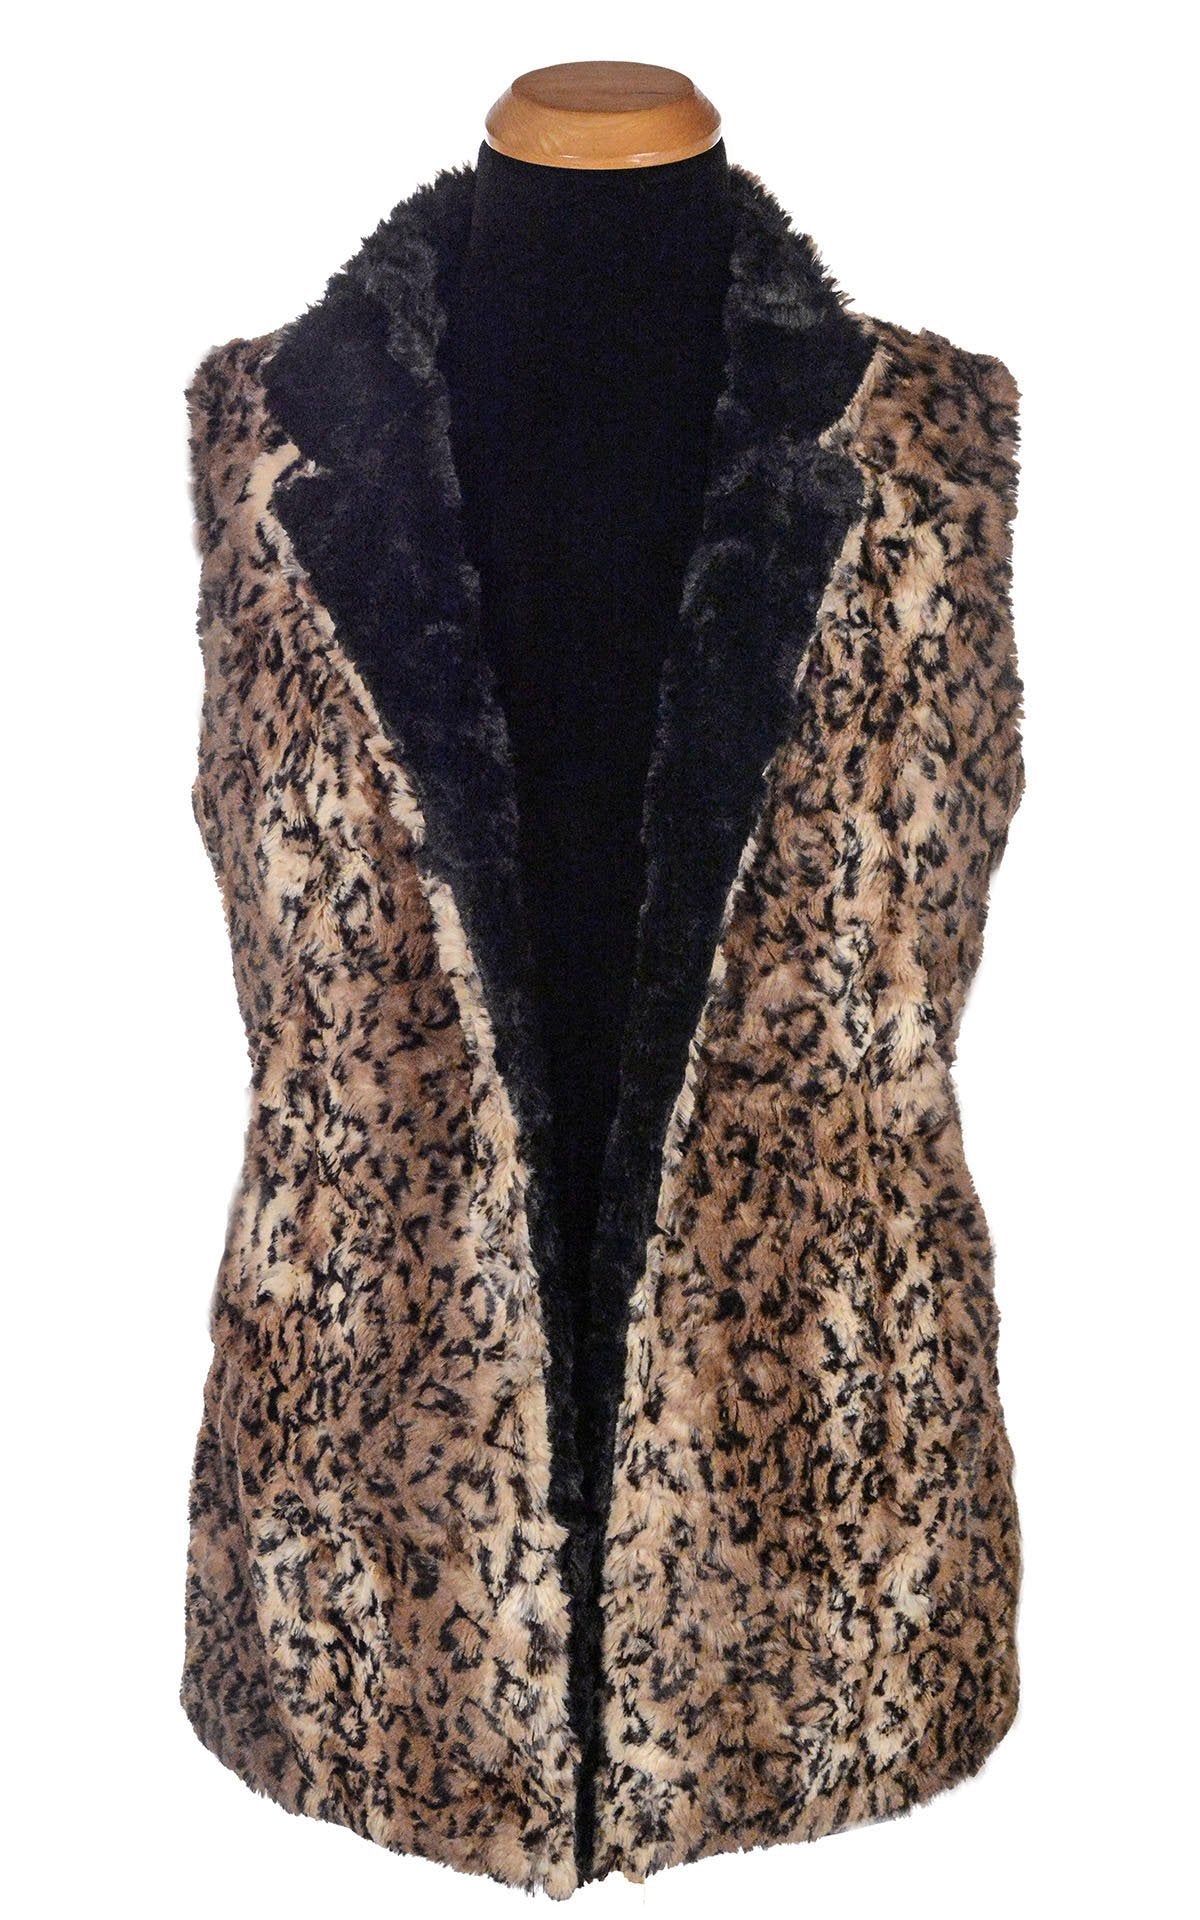 Open view of Mandarin Vest Short | Carpathian Lynx Brown, Tan, and Black Animal Print and Cuddly Black Faux Fur | Reversible | Handmade in Seattle WA | Pandemonium Millinery